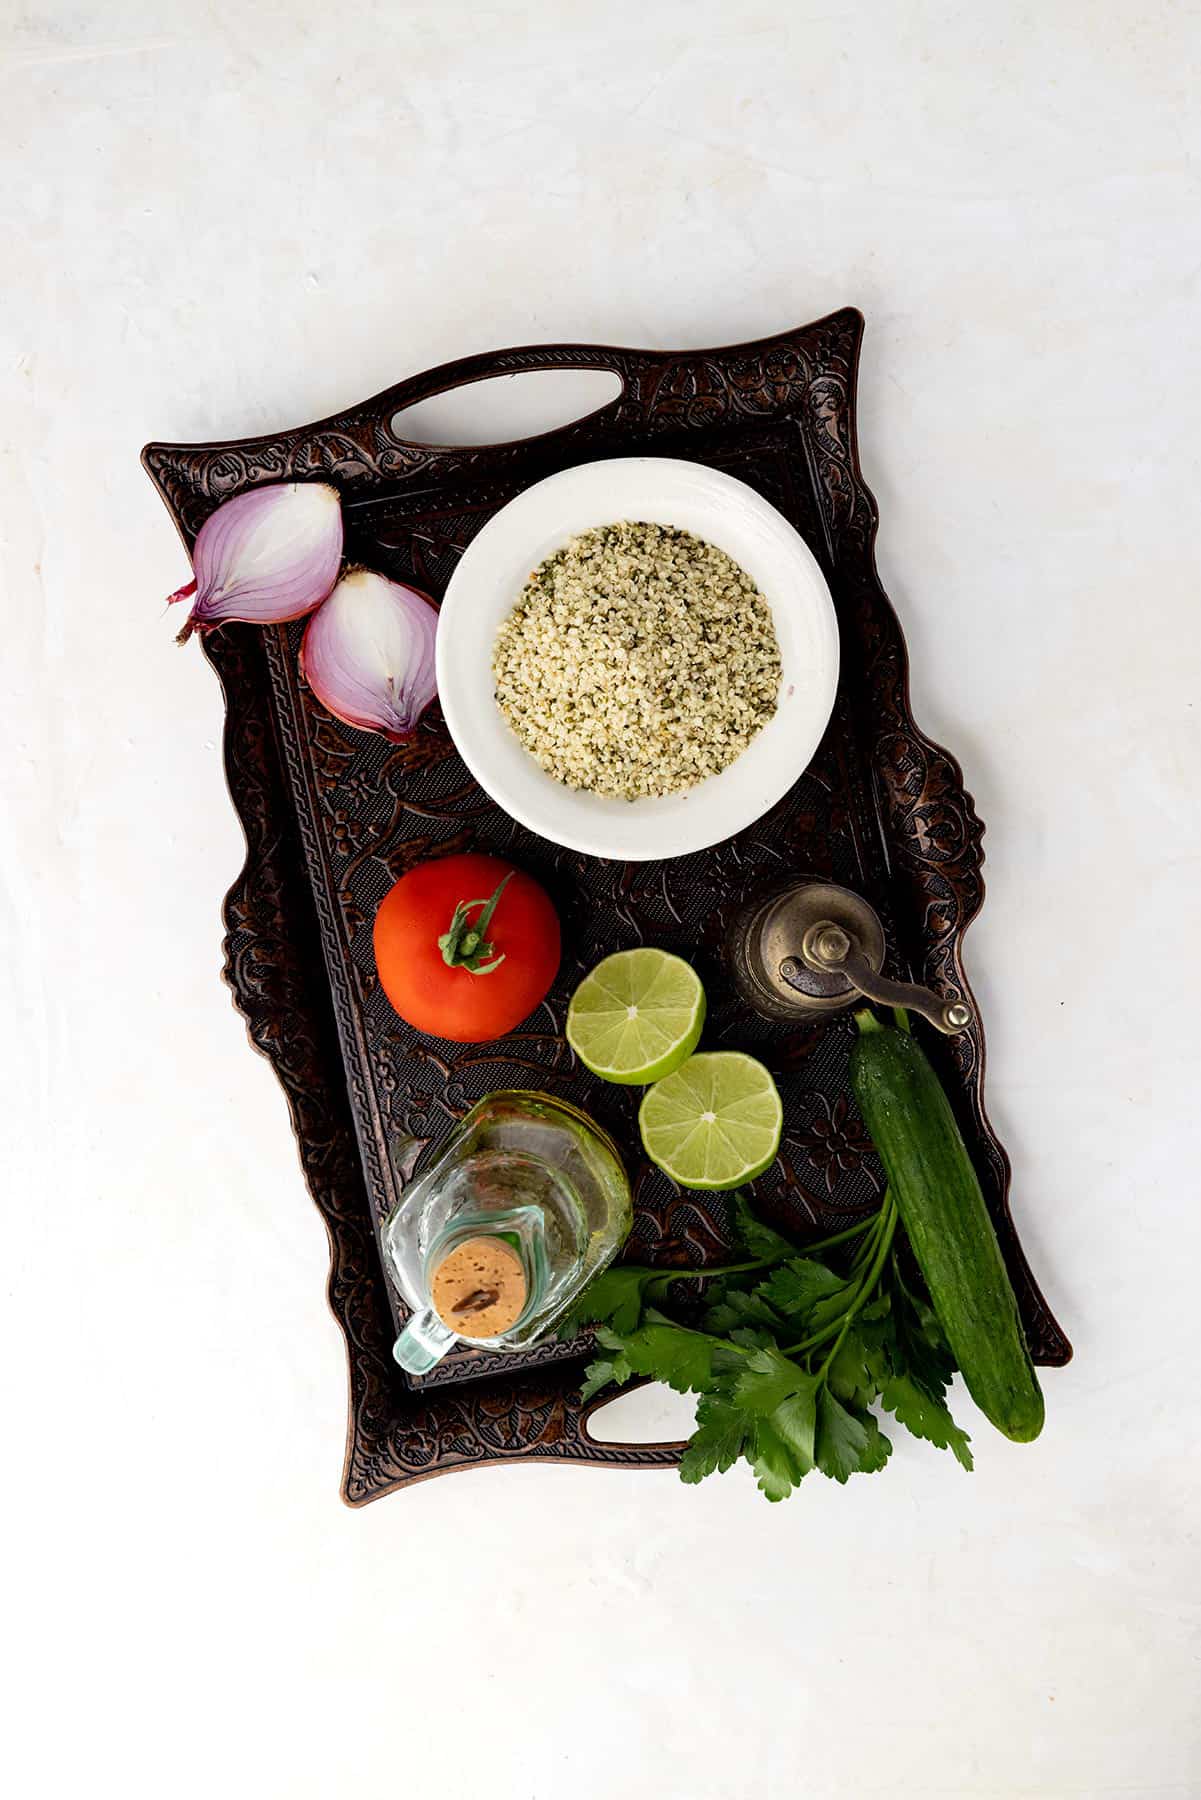 Ingredients for gluten-free tabbouleh salad.